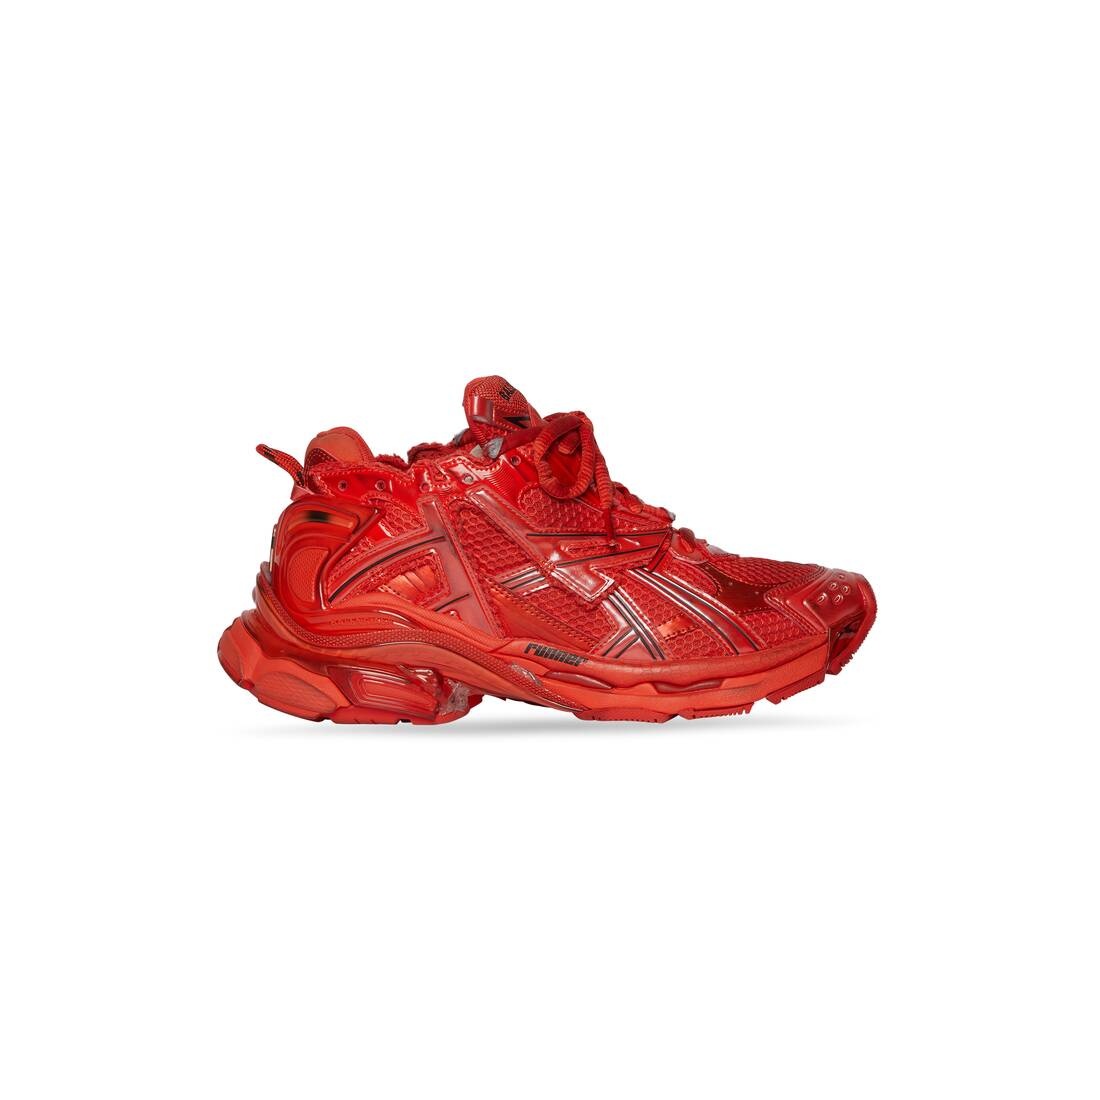 Men's Runner Sneaker in Red - 1